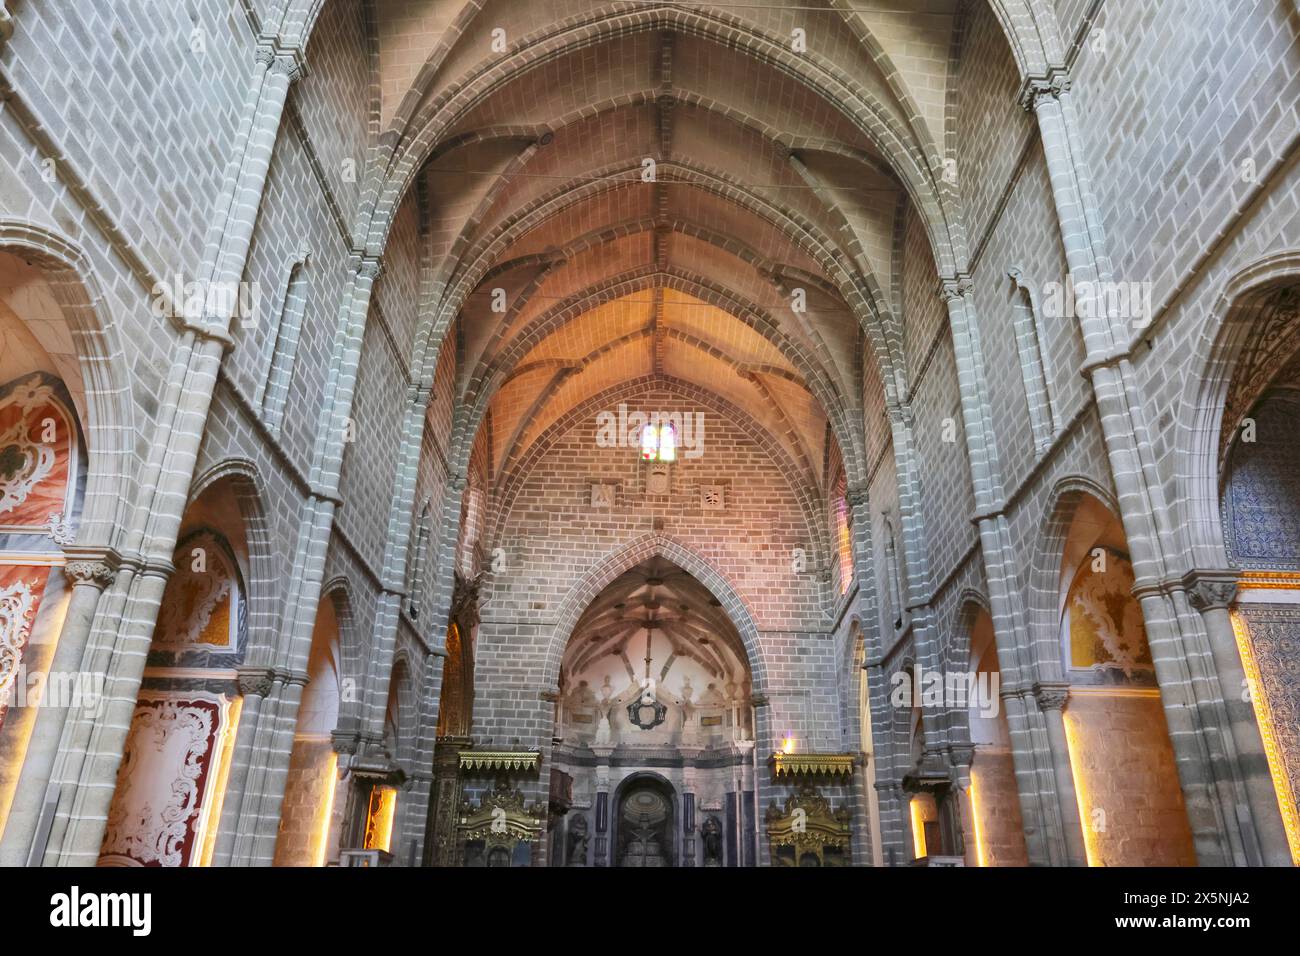 Innenraum der Igreja e Mosteiro de São Francisco (Kirche des Heiligen Franziskus und Kloster), Evora, Portugal Stockfoto